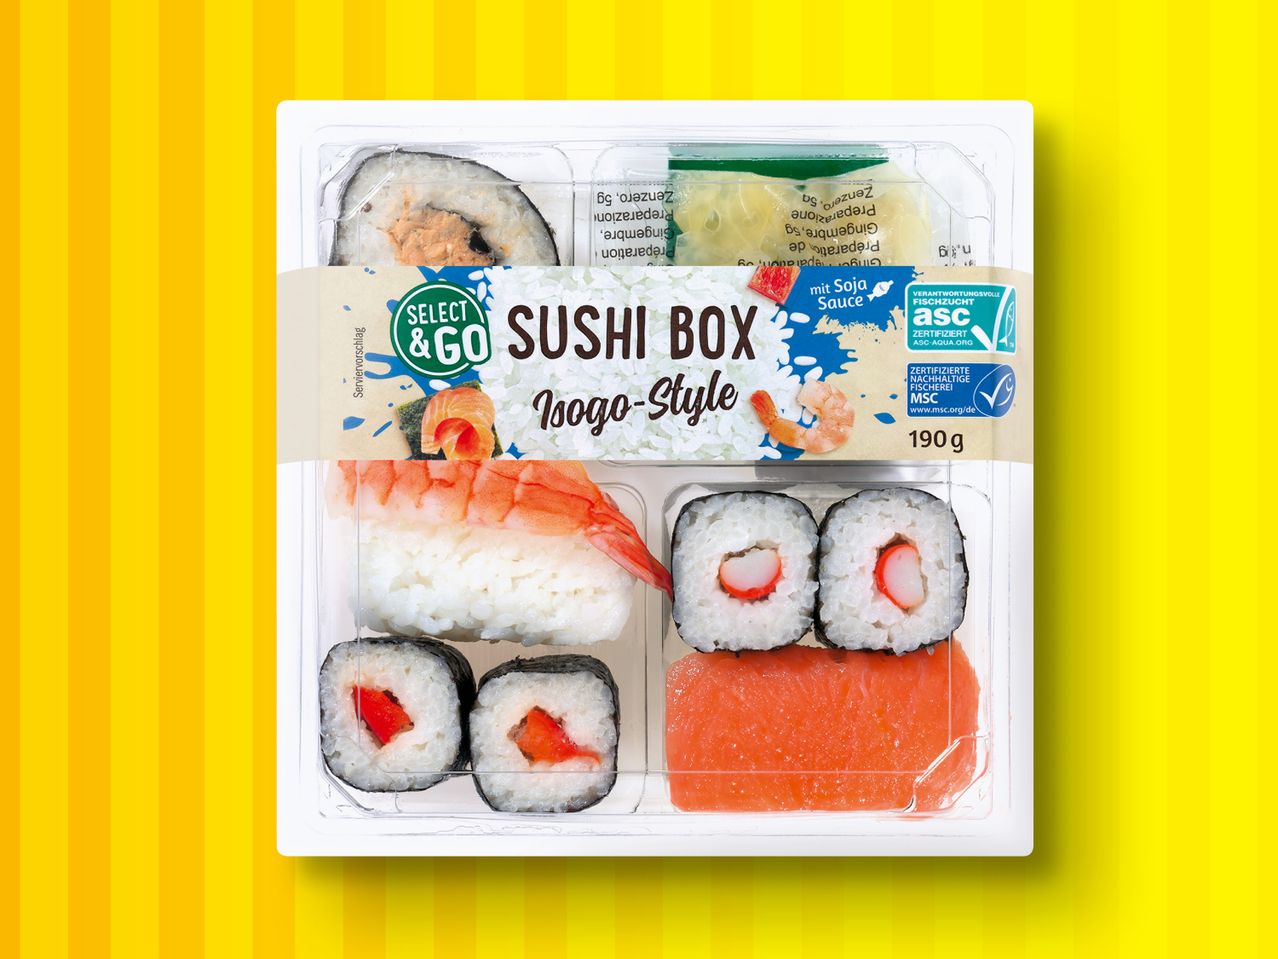 ASC/MSC Go Box Sushi & Select